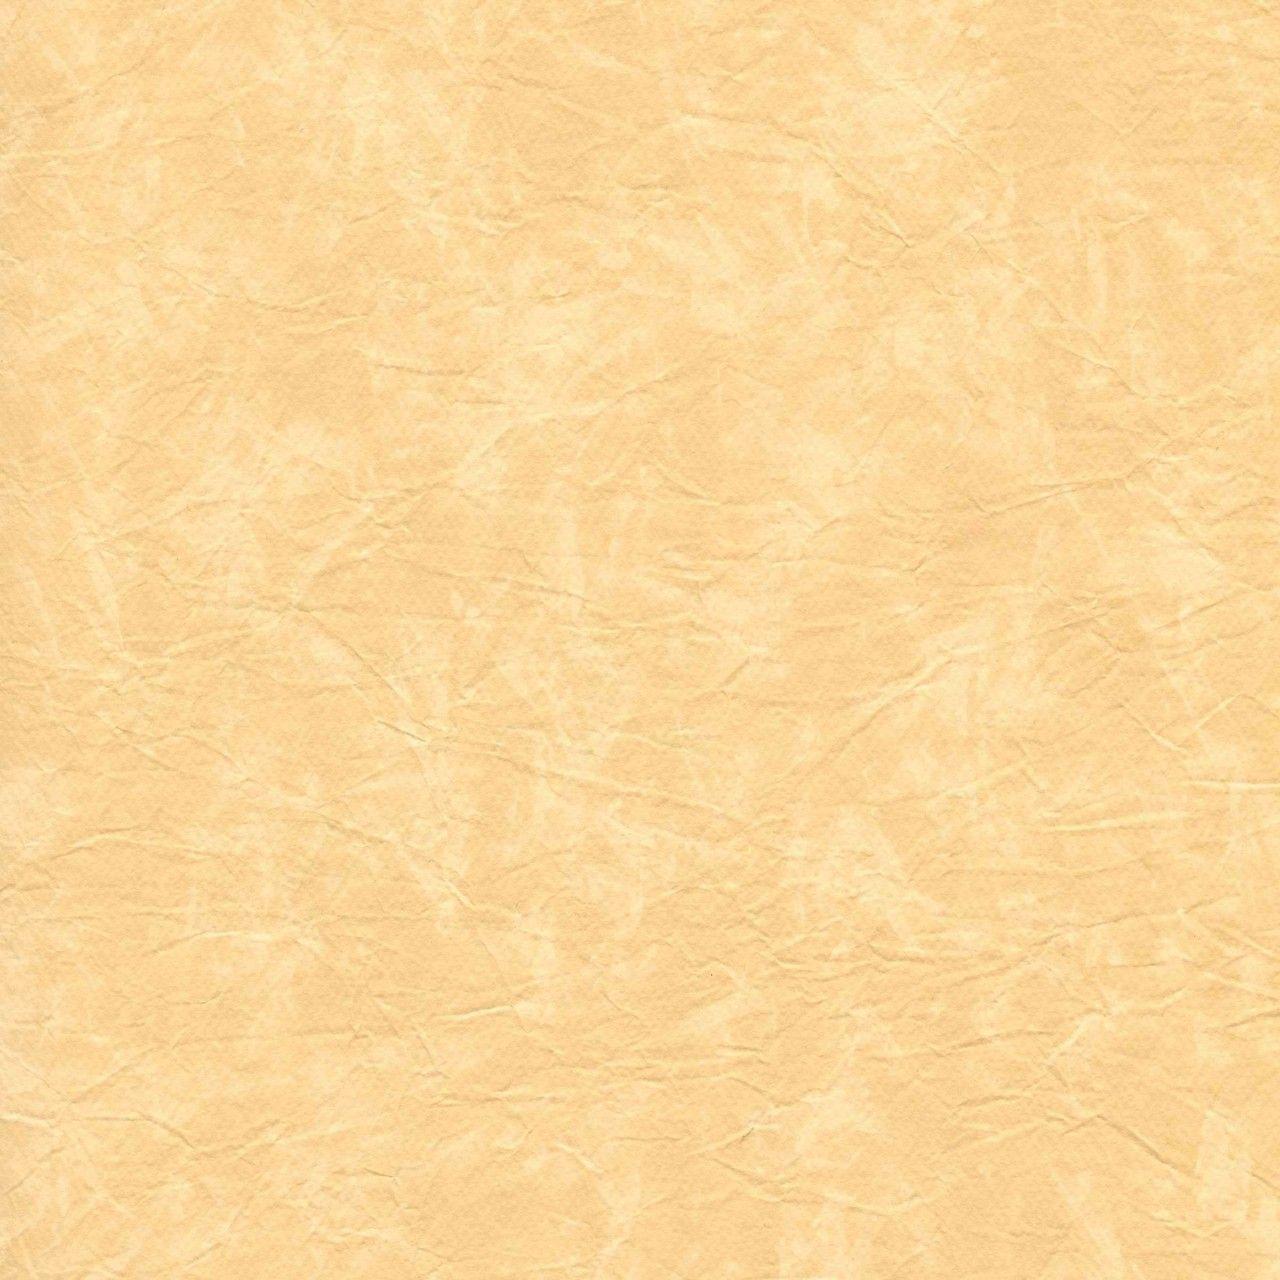 Peach Tan 438 86494 Scroll Sidewall Wallpaper All About Texture Ii